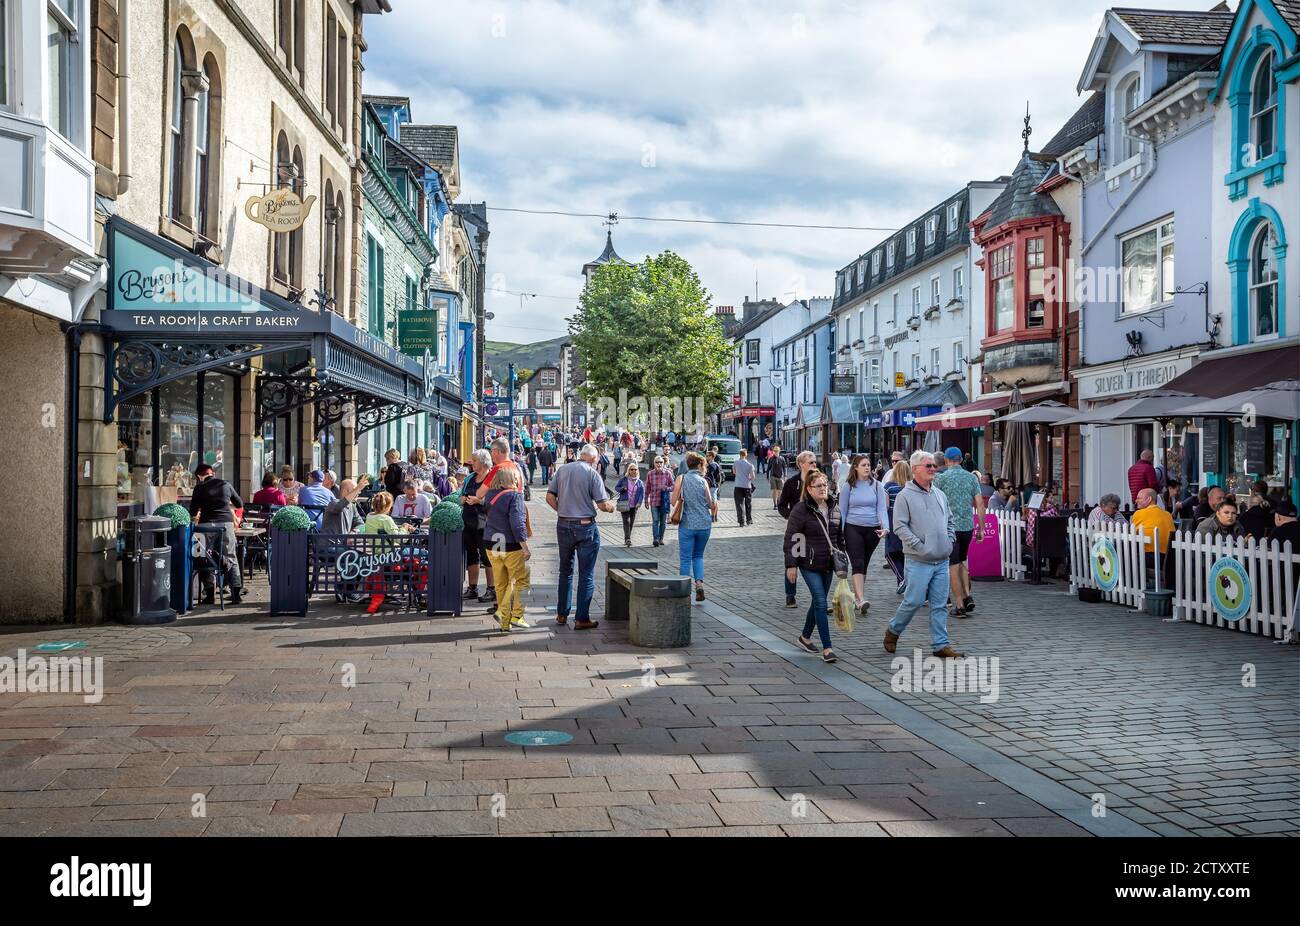 People thronging the centre of Keswick on the main street, Keswick, Cumbria, UK on 18 September 2020 Stock Photo